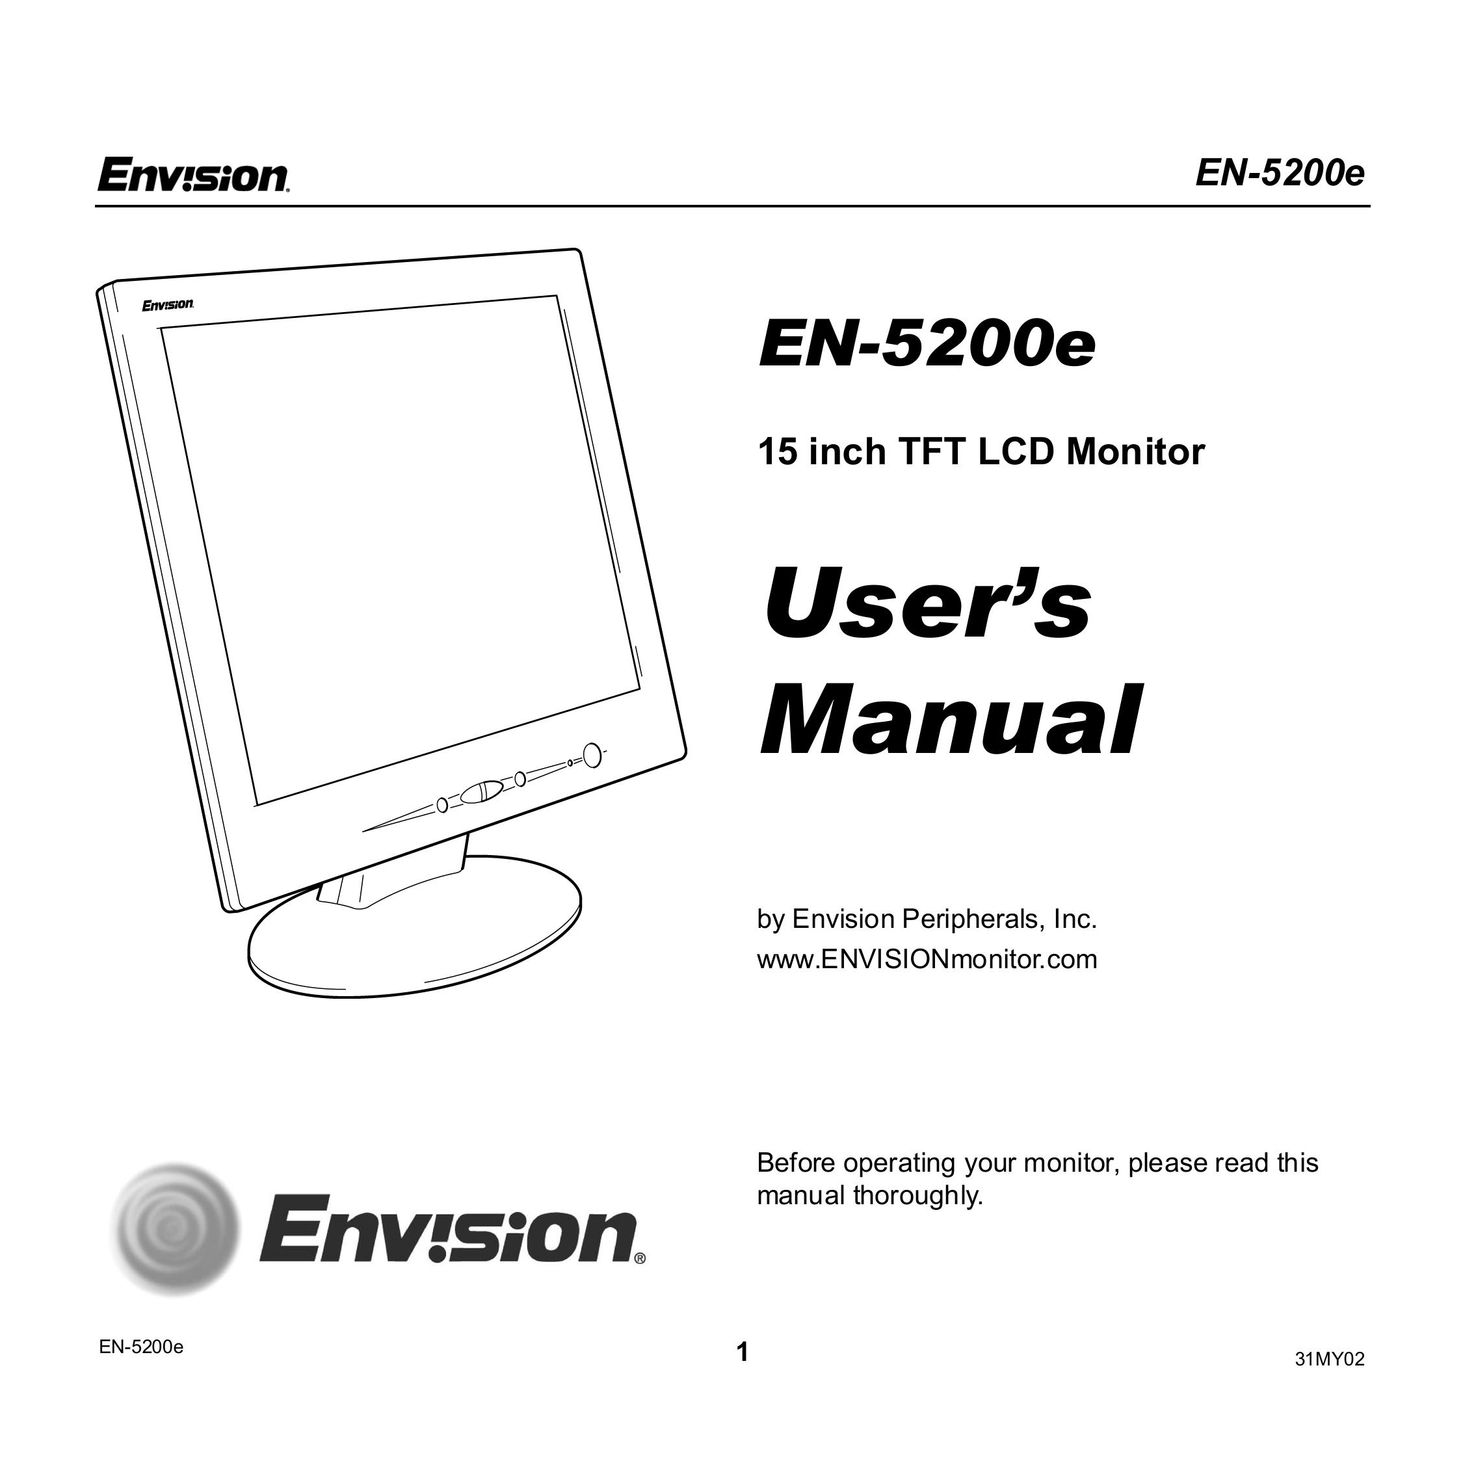 Envision Peripherals EN-5200E Computer Monitor User Manual